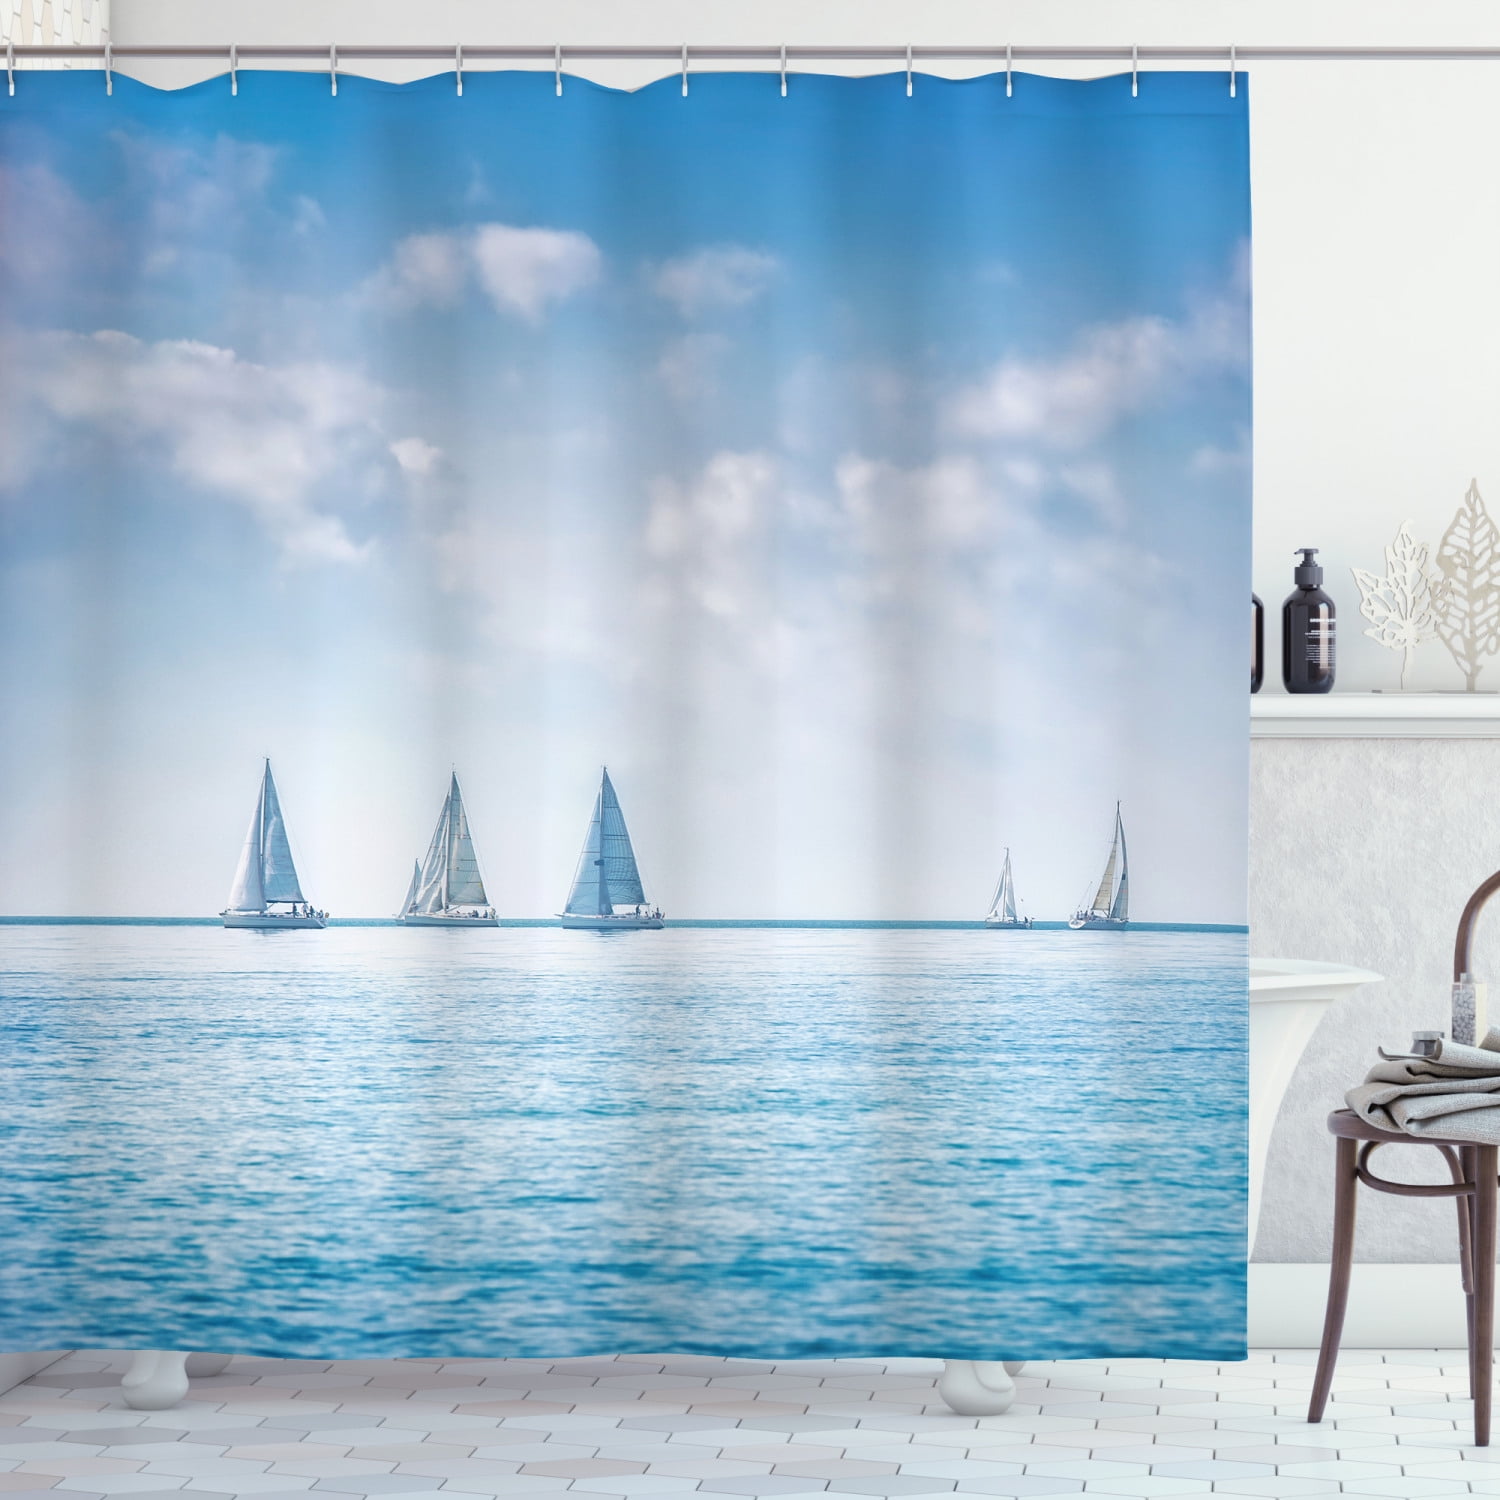 60x72" Waterproof Fabric Shower Curtain Hooks Storm Ocean Sailing Ship Scenery 